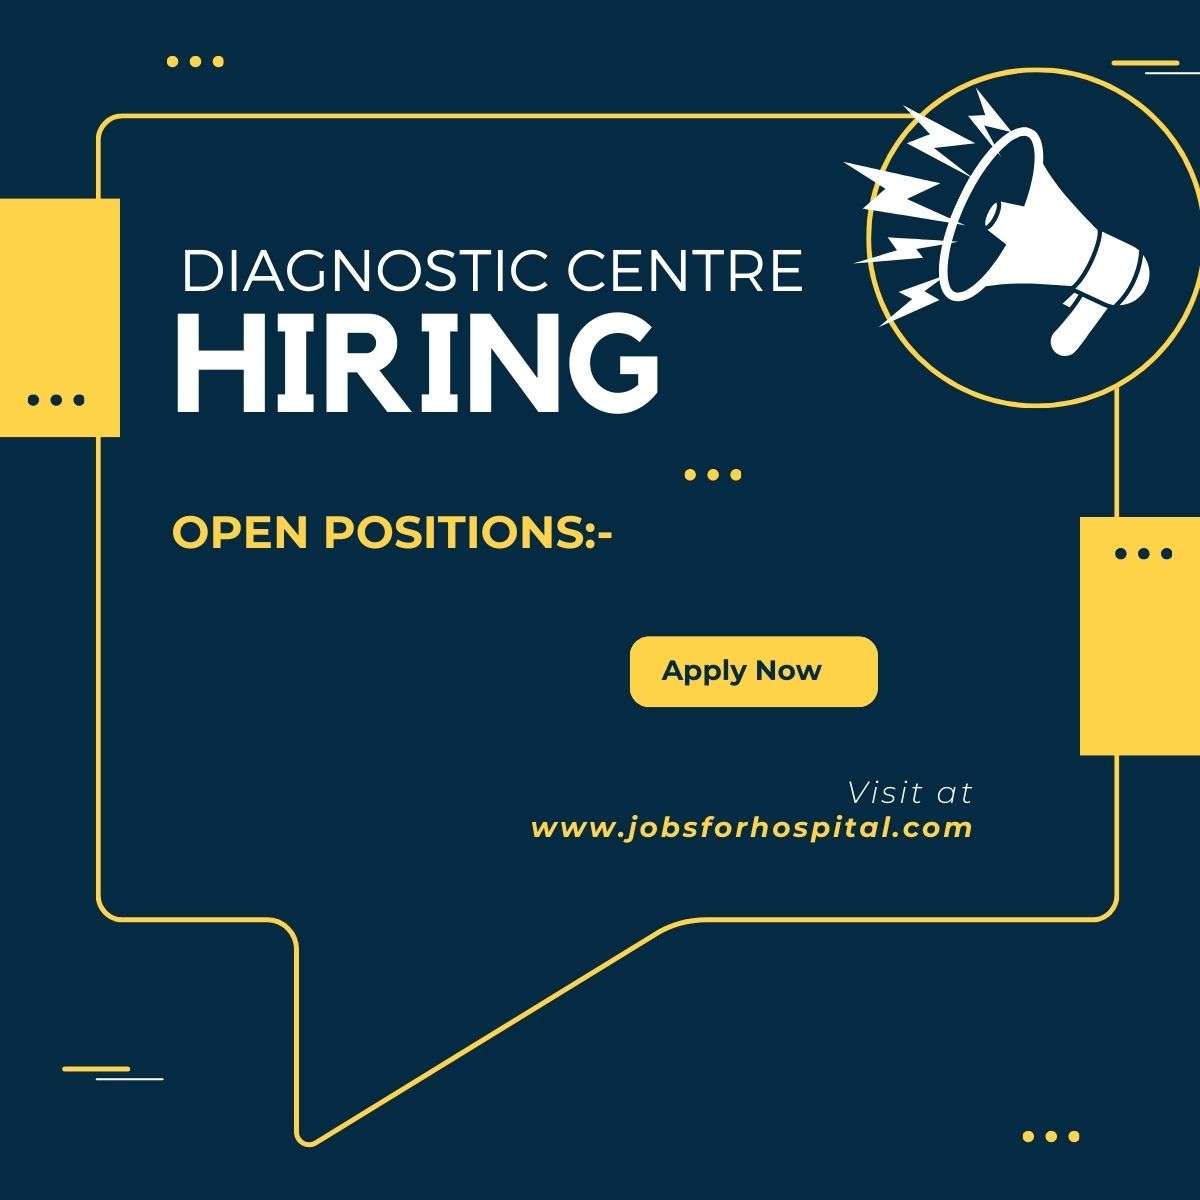 DIAGNOSTIC CENTRE jobs for hospital